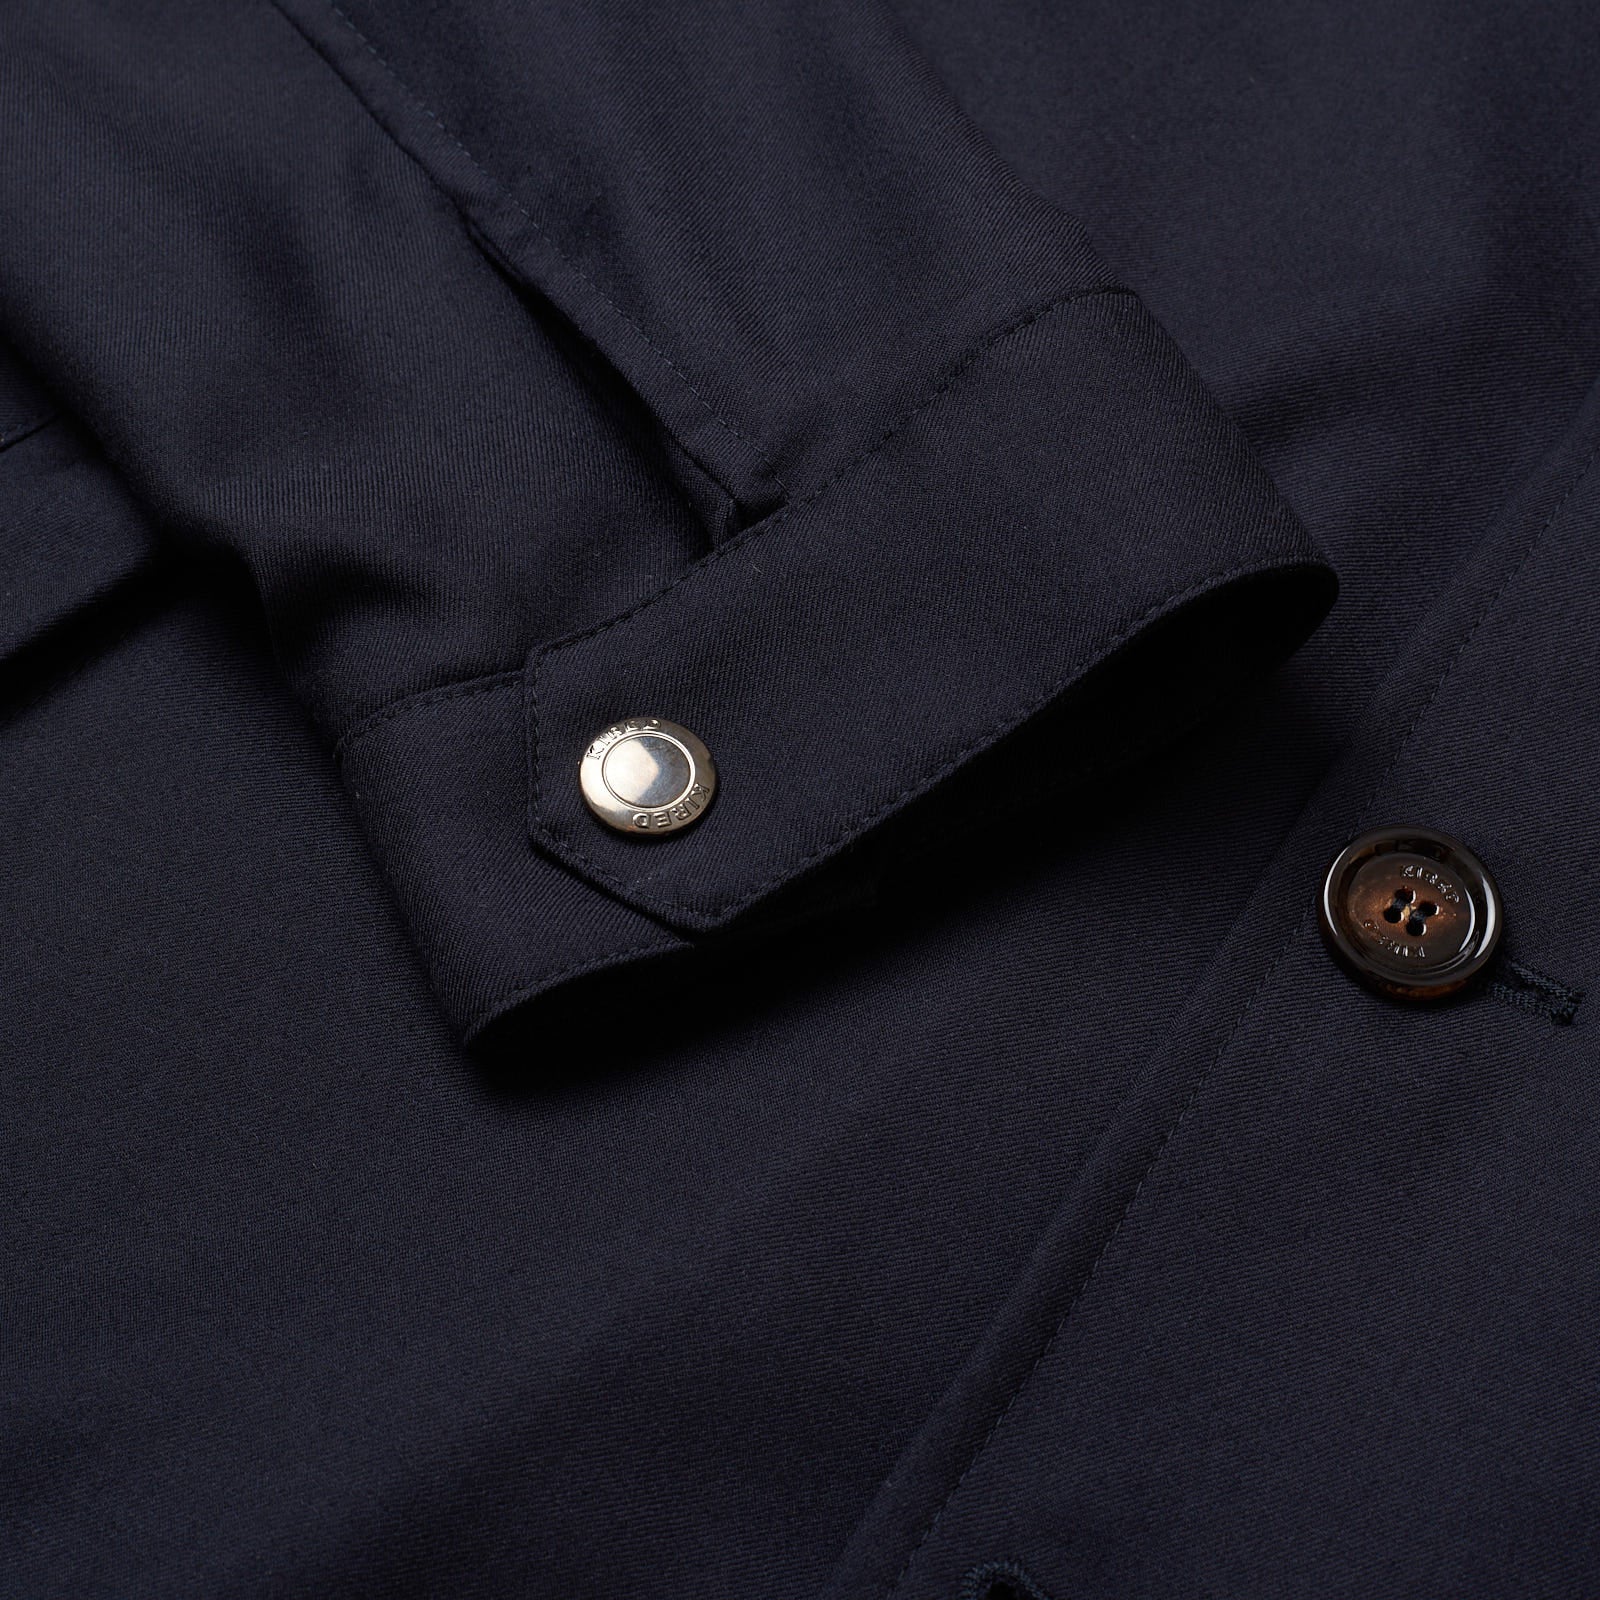 KITON KIRED Climatek "Baglio" Blue Cashmere-Silk Unlined Blouson Jacket 50 US M KIRED